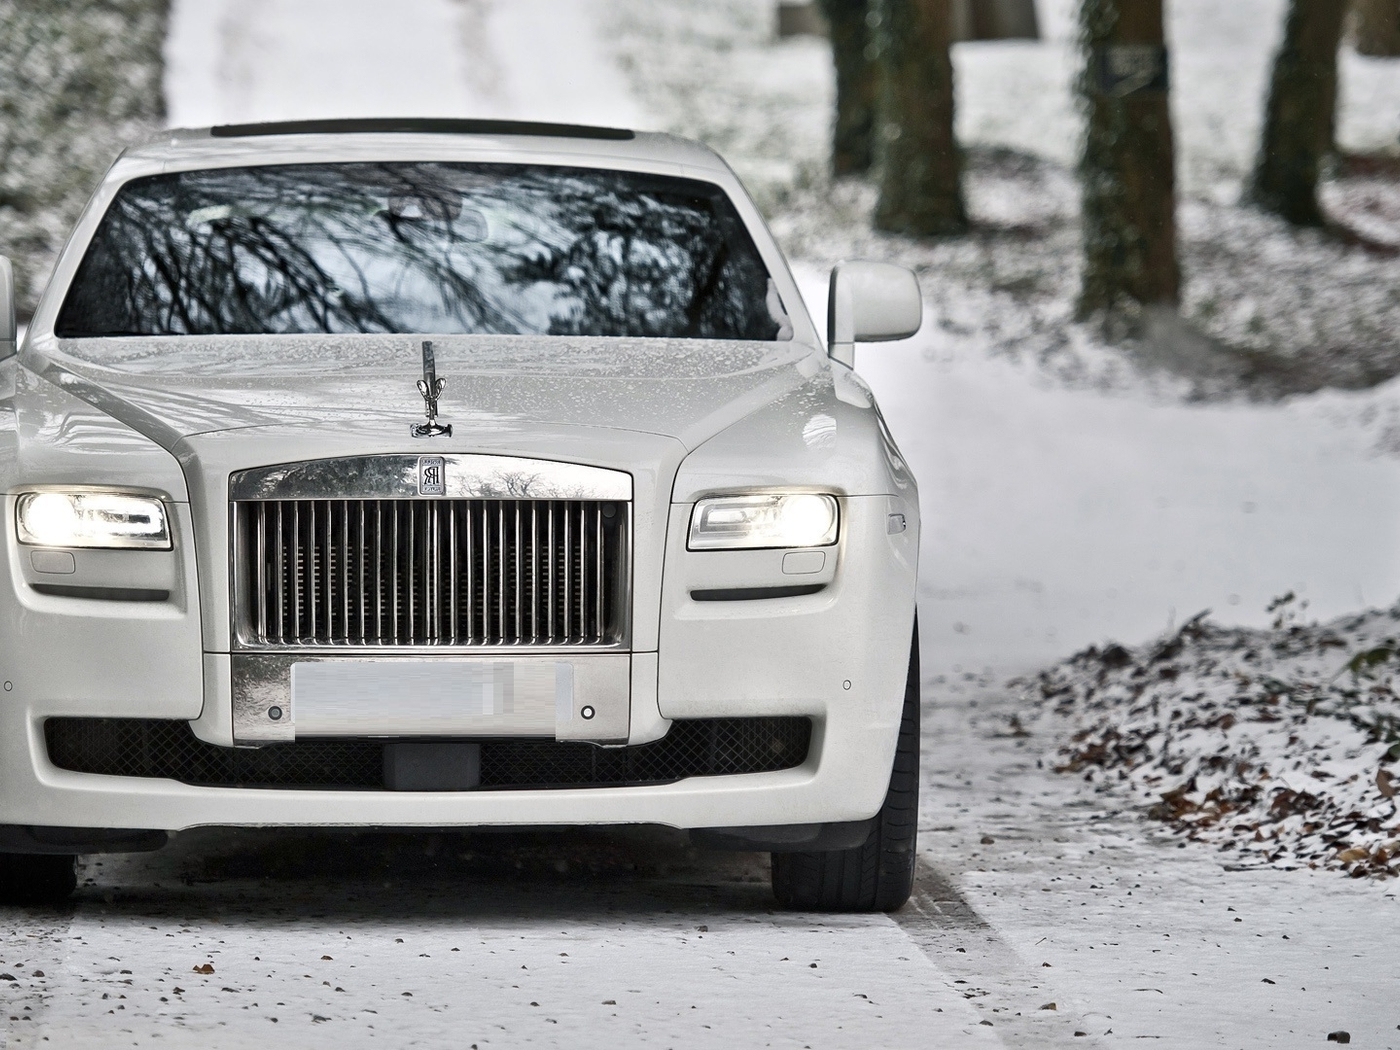 Картинка: Машина, бизнес, класс, фары, белый, дорога, снег, зима, деревья, Rolls-Royce, Ghost, Series II